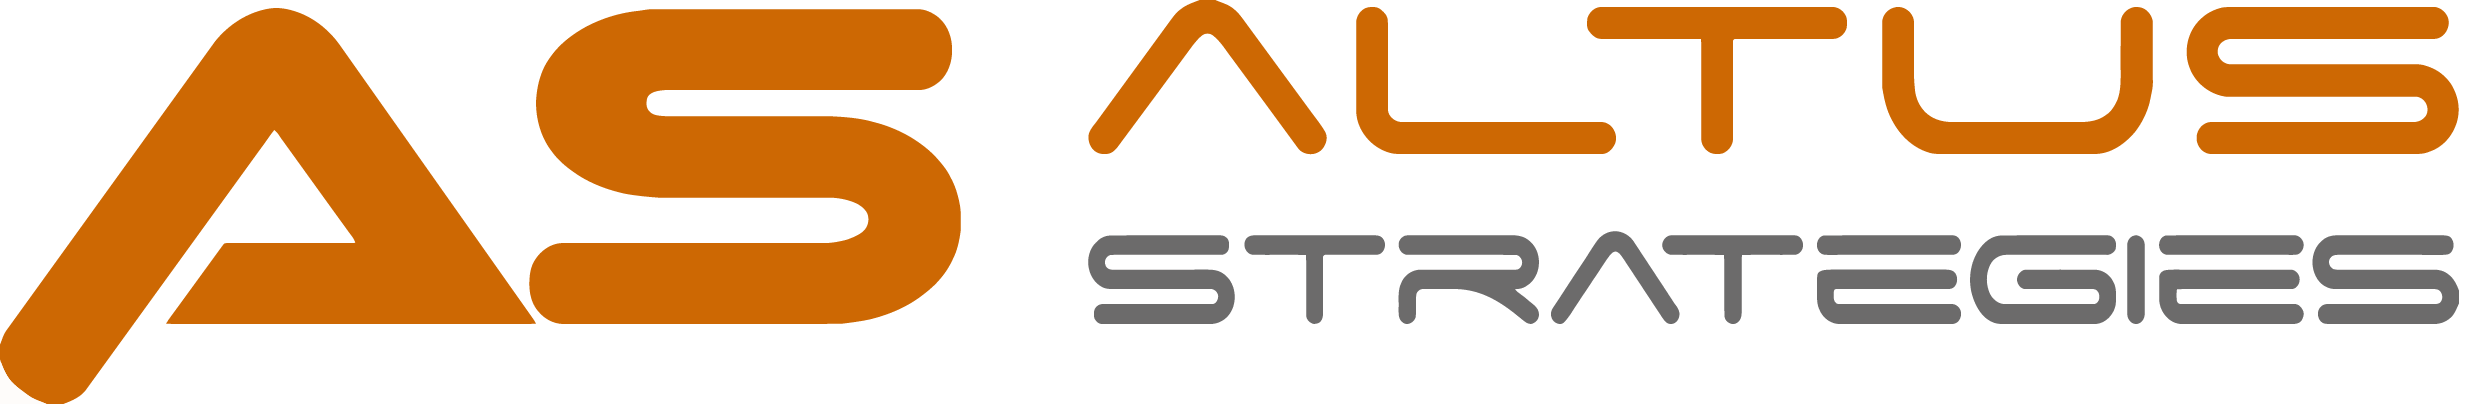 Altus Strategies PLC, Wednesday, June 17, 2020, Press release picture